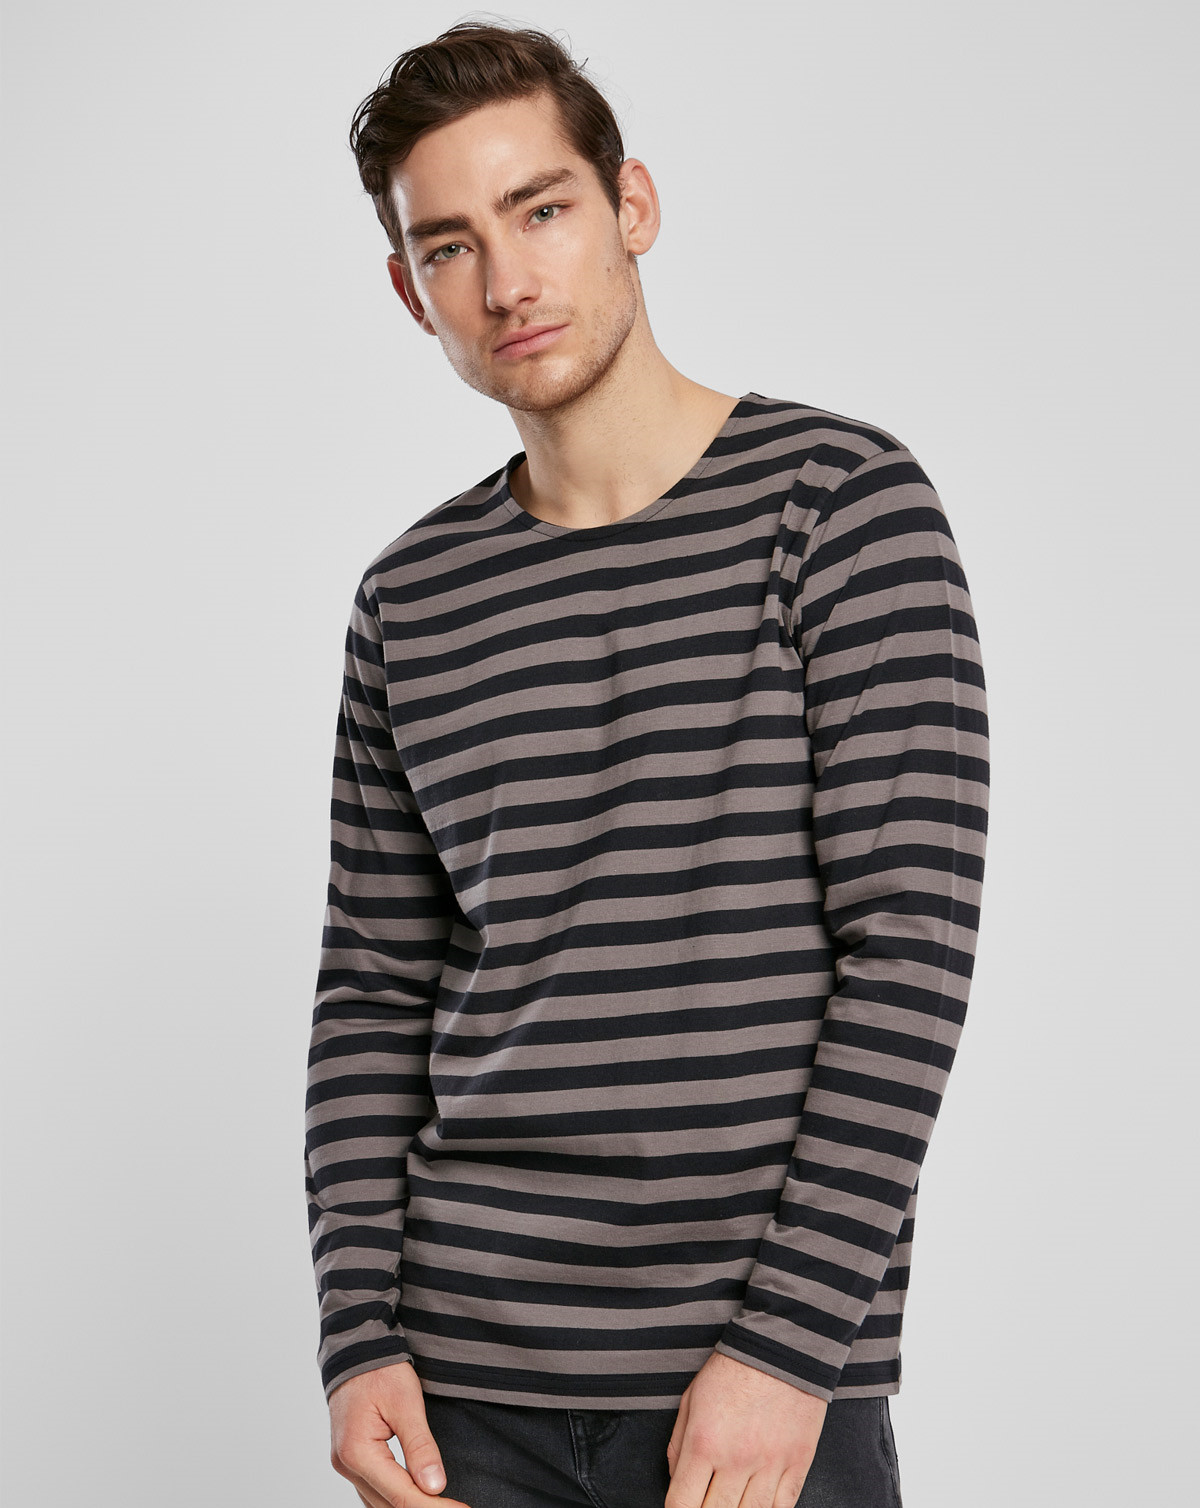 Urban Classics Regular StripeLong Sleeve T-Shirt (Asphalt / Black, M)